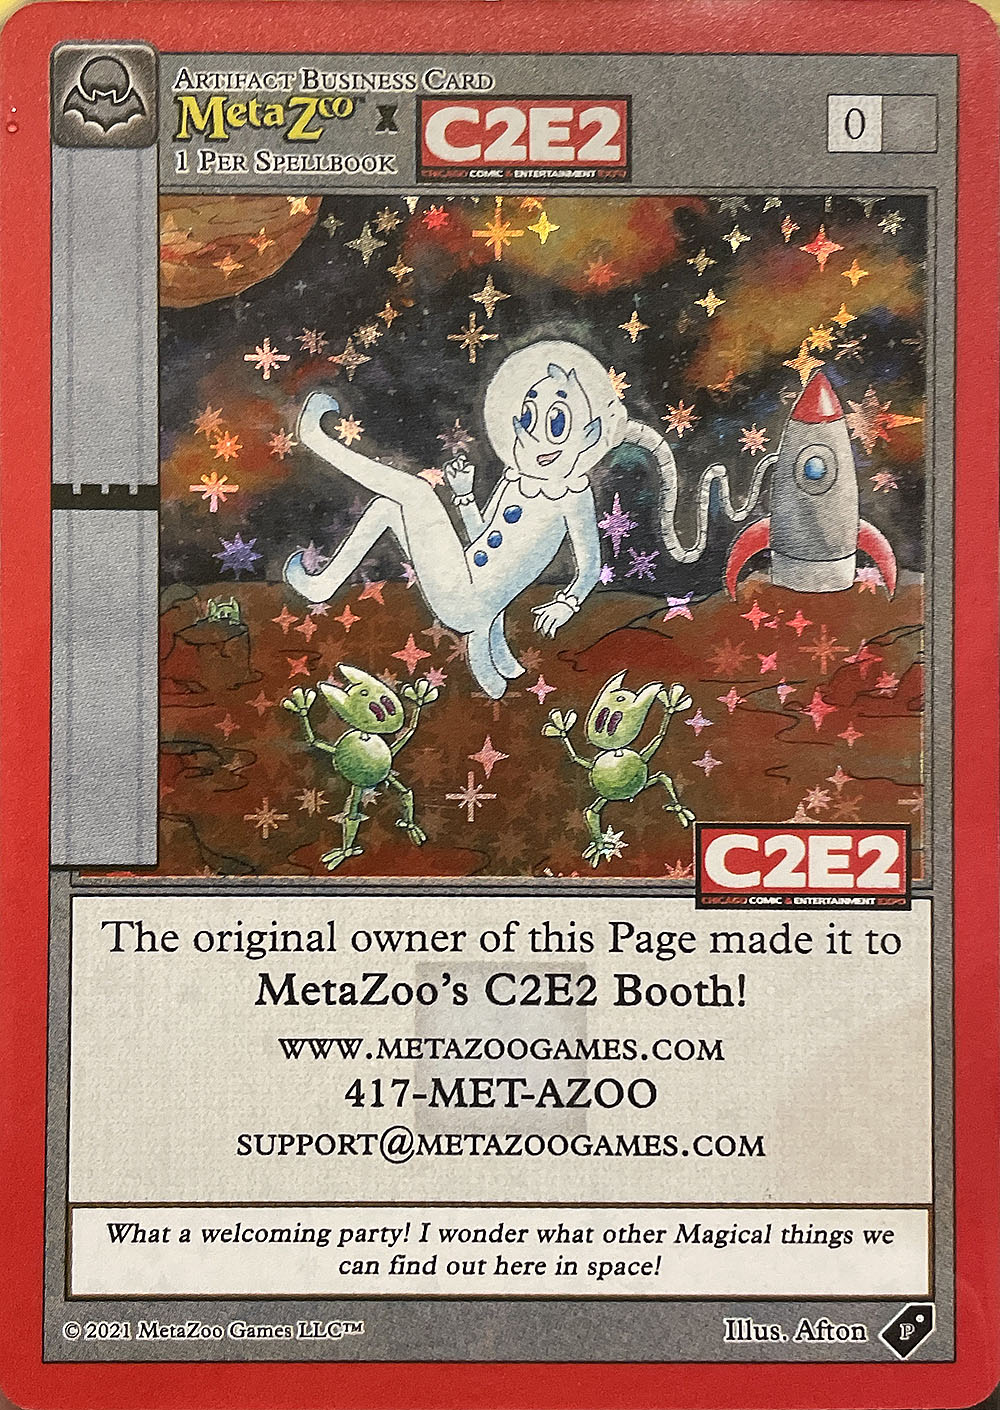 MetaZoo x C2E2, Chicago